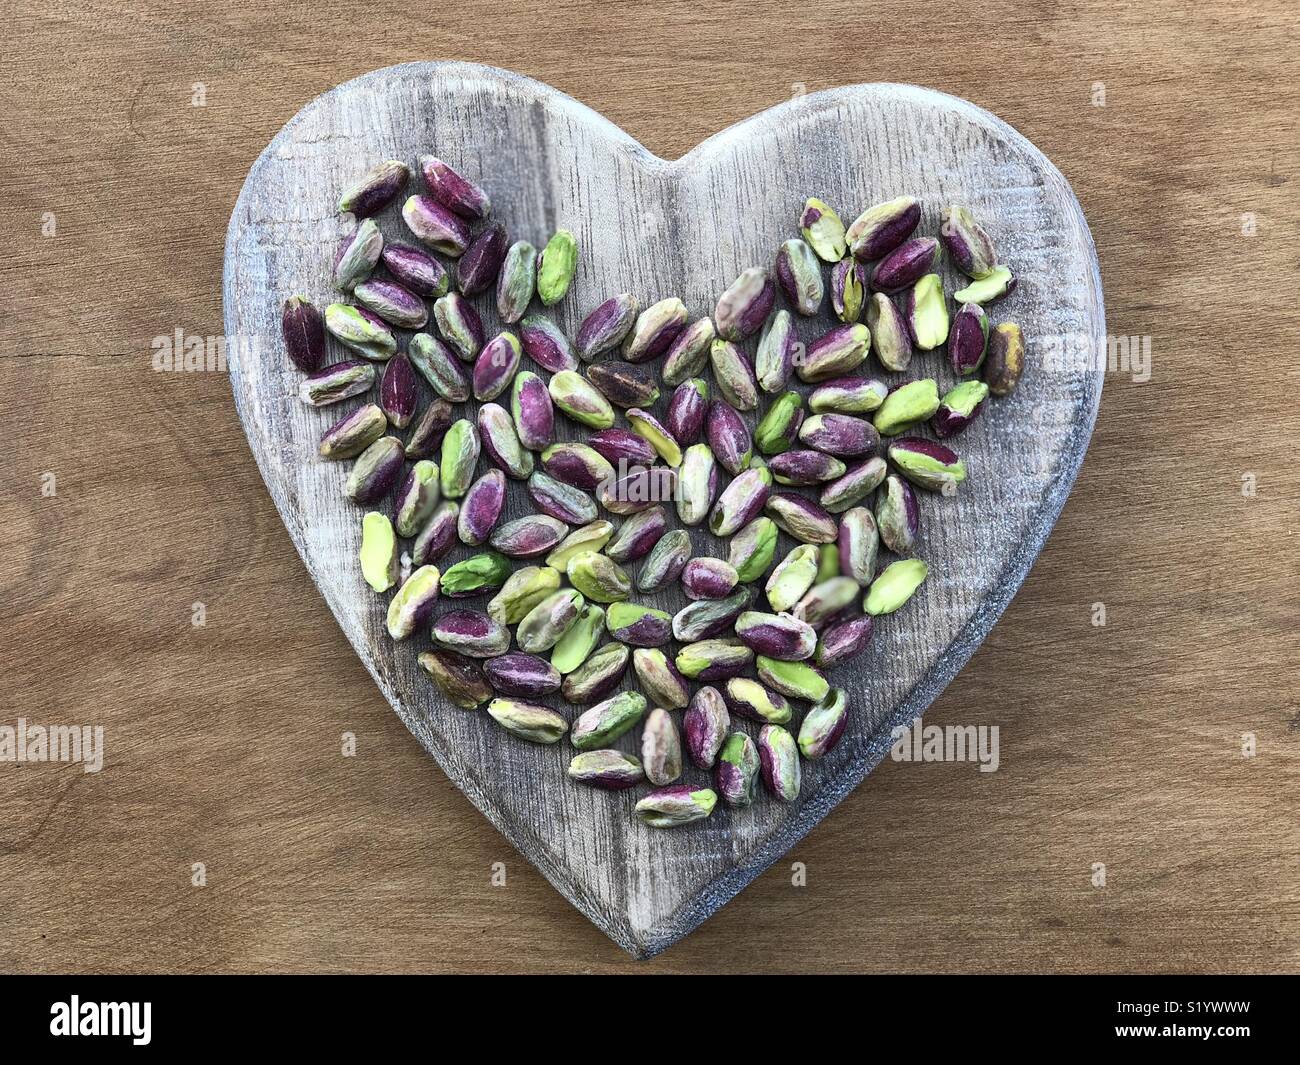 Love pistachios Stock Photo